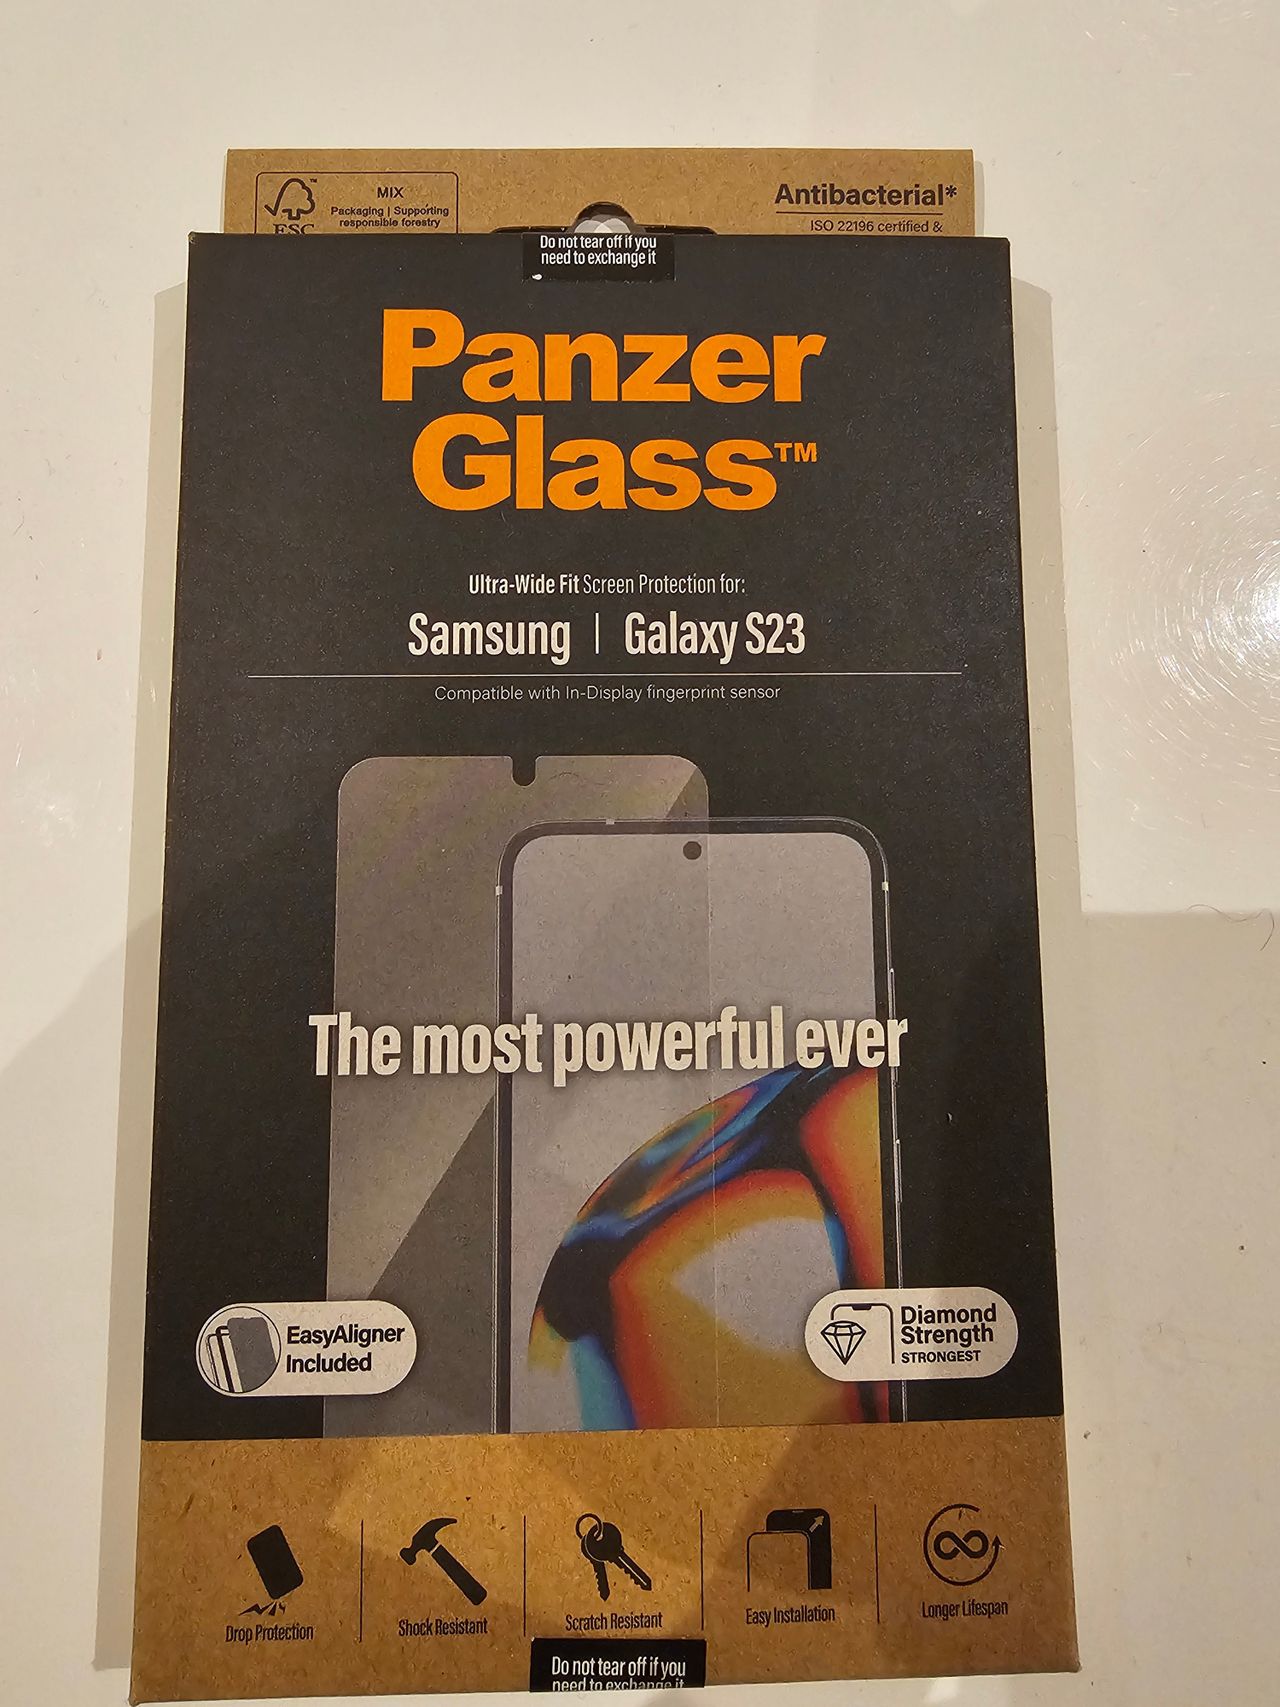 PanzerGlass™ Samsung Galaxy S22 Serie - German on Vimeo